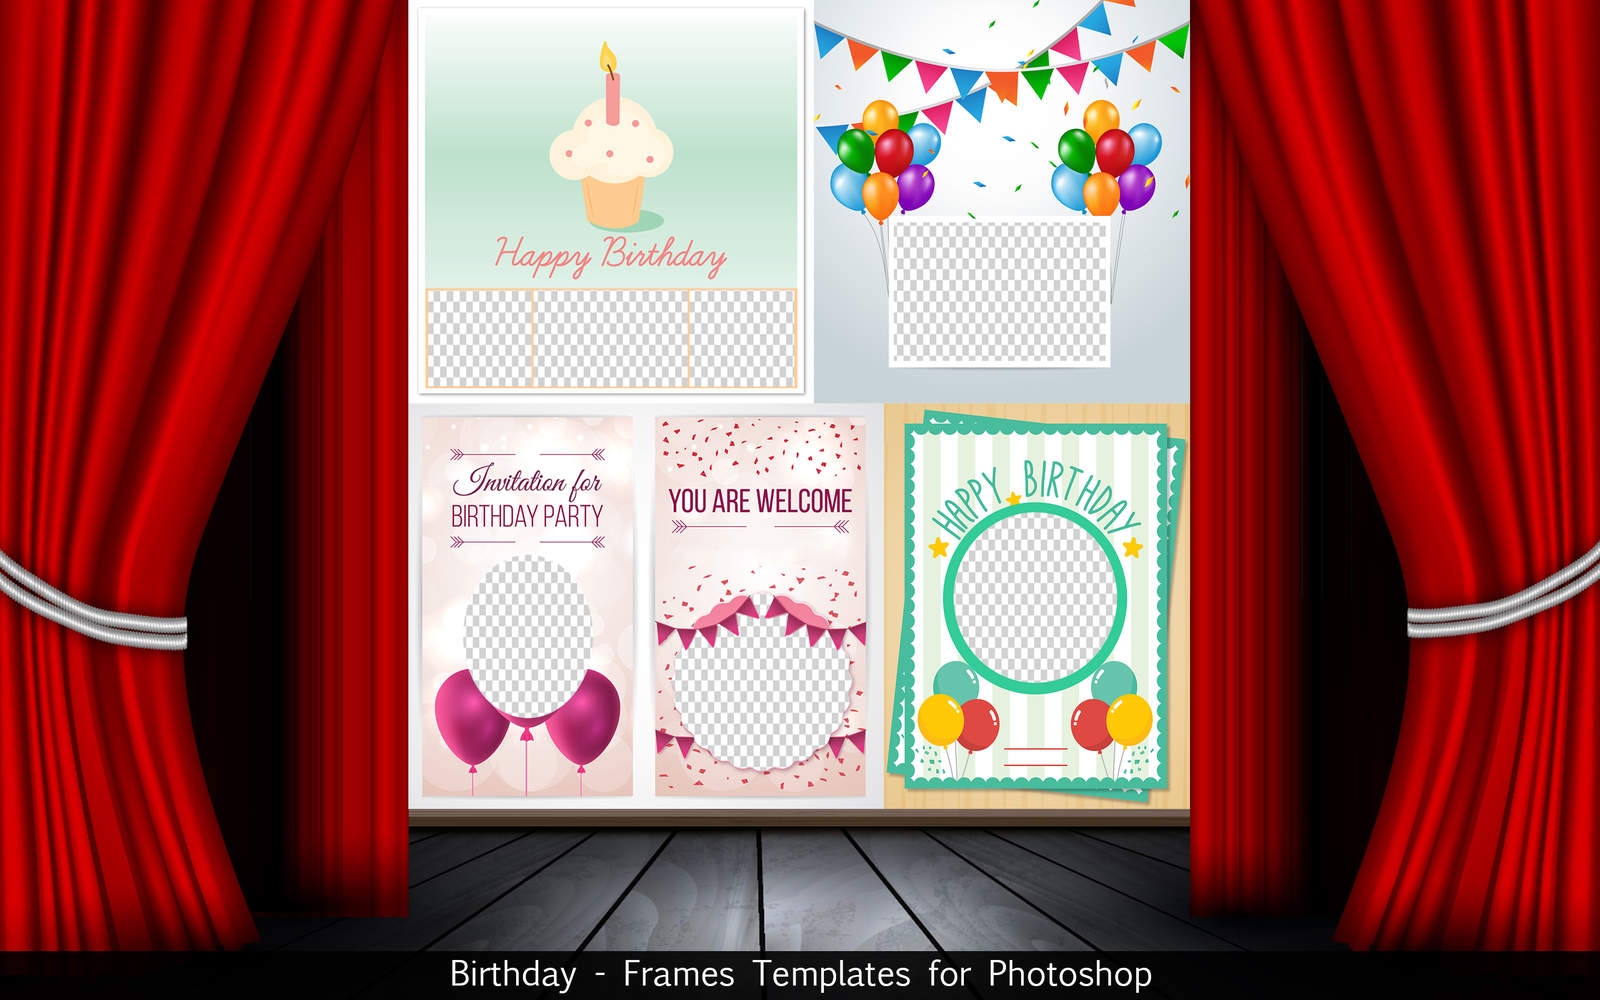 Birthday - Frames Templates for Photoshop 1.0 : Main Window